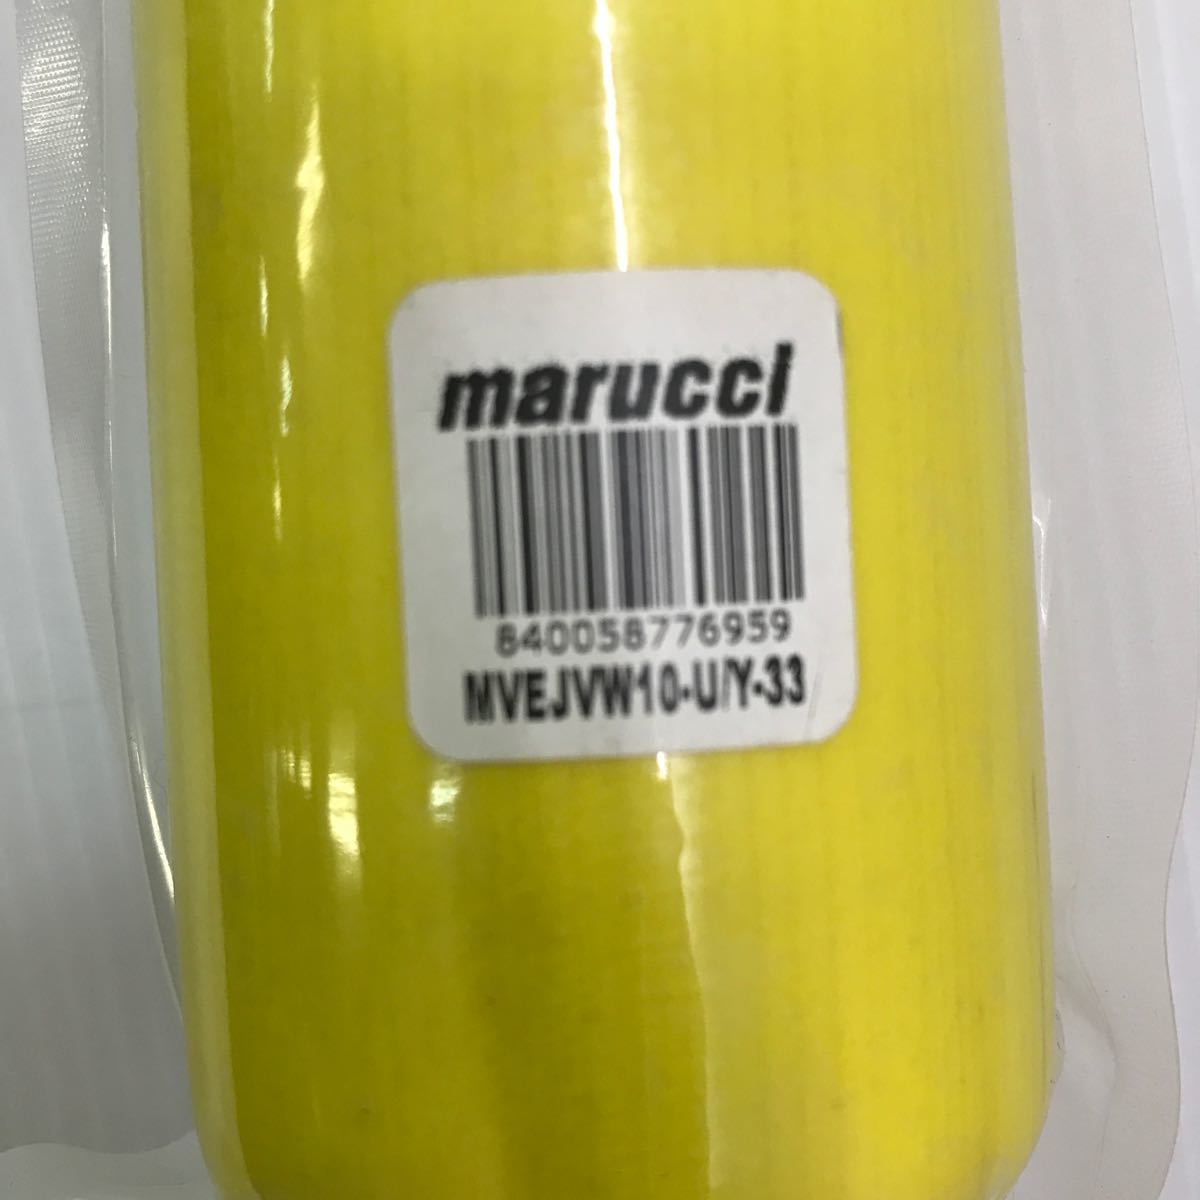 B-5213 未使用品 マルーチ marucci Pro Model 硬式 83cm 木製 バット MVEJVW10-U 野球 _画像8